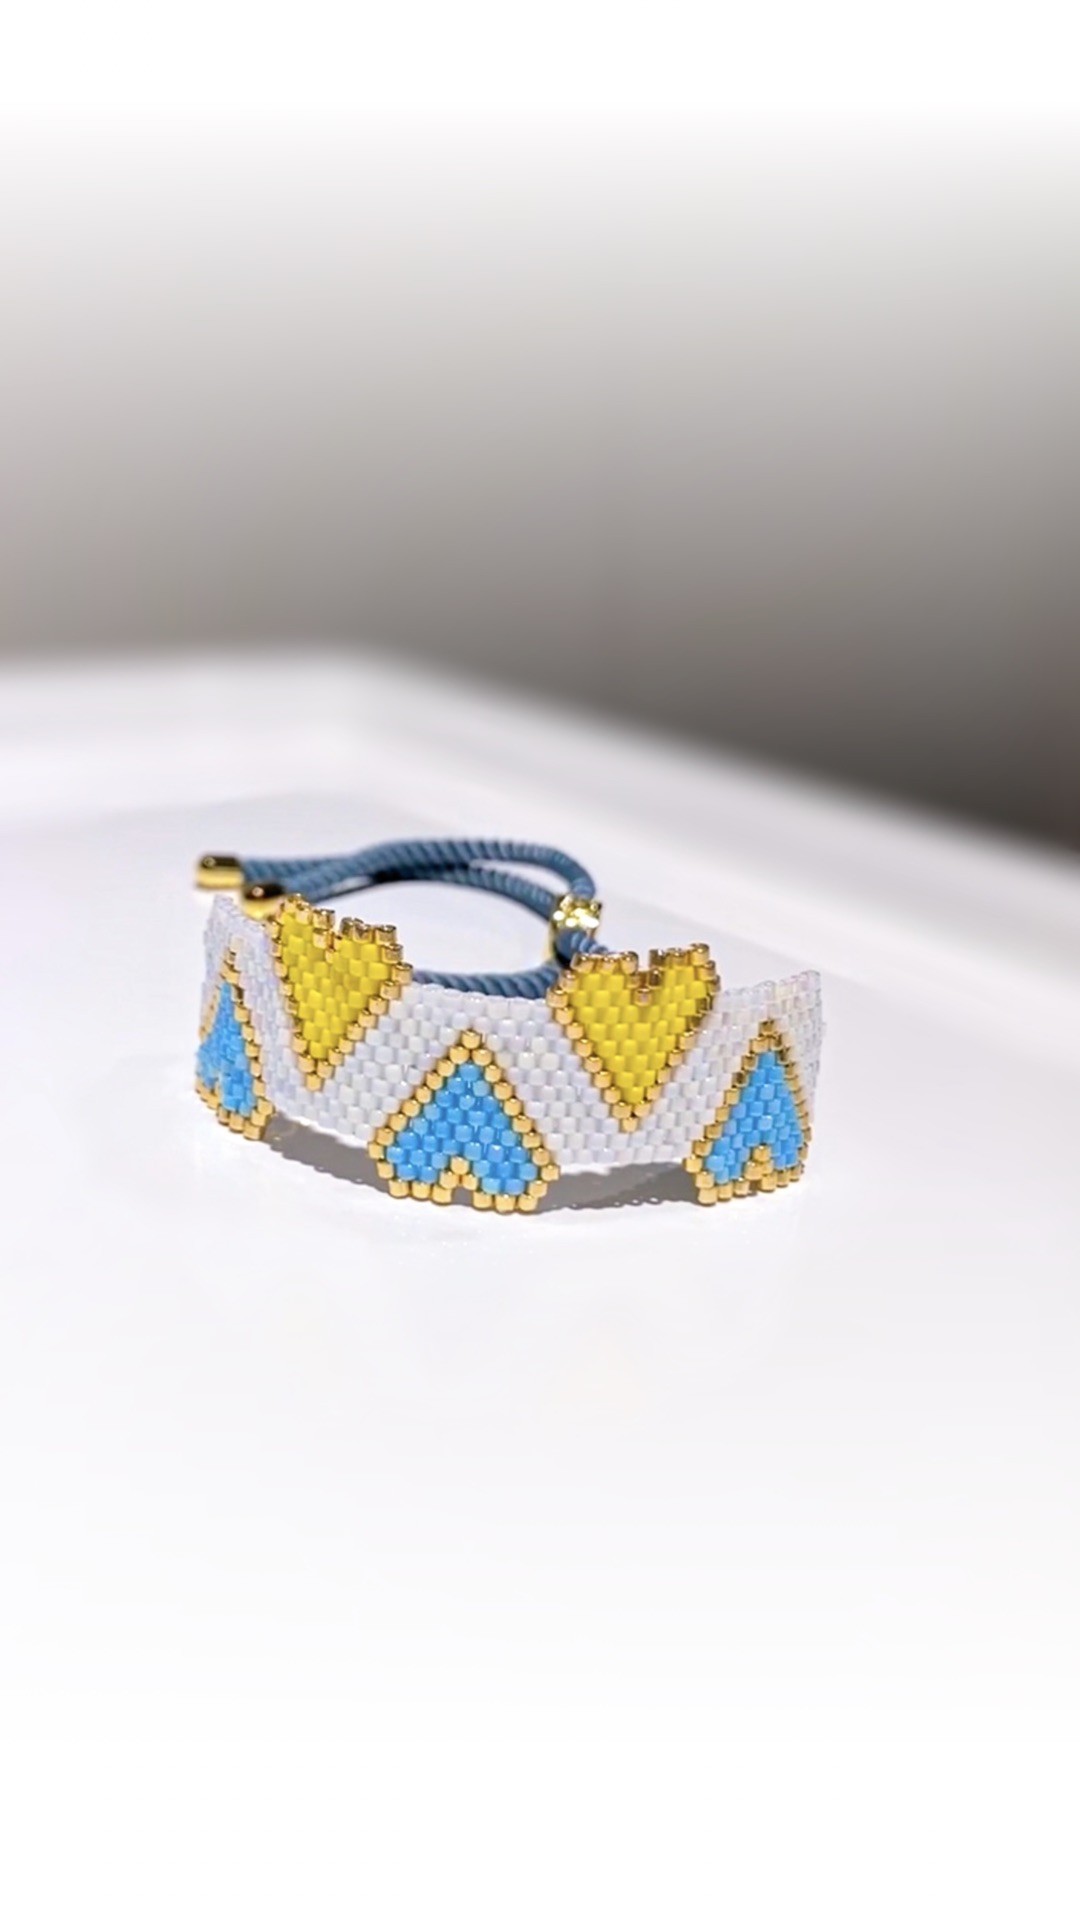 Bracelet Ukrainian hearts in symbolic blue&yelollow colors